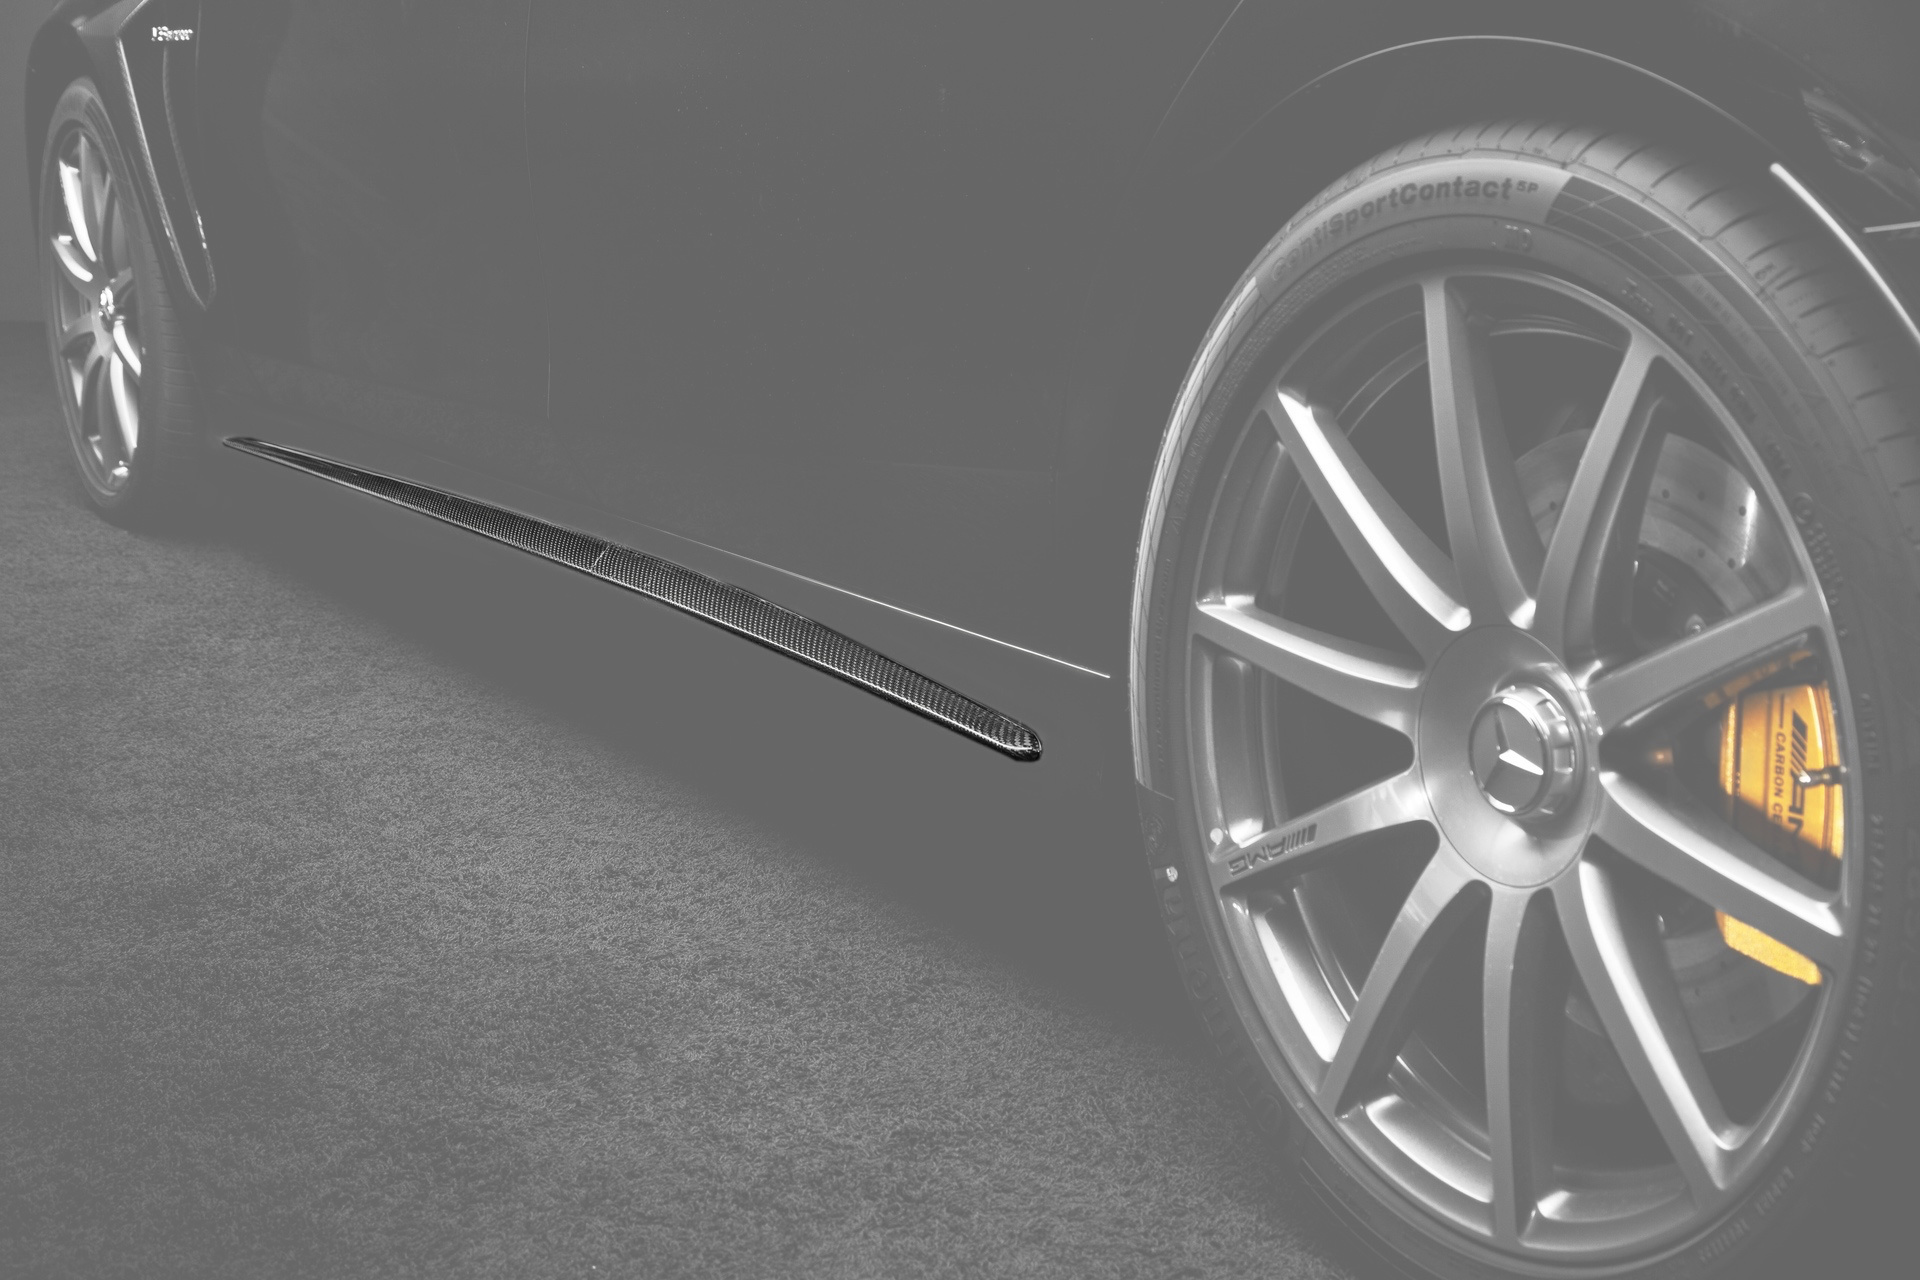 Hodoor Performance Carbon fiber door sill pads 63 AMG Style for Mercedes S-class W222